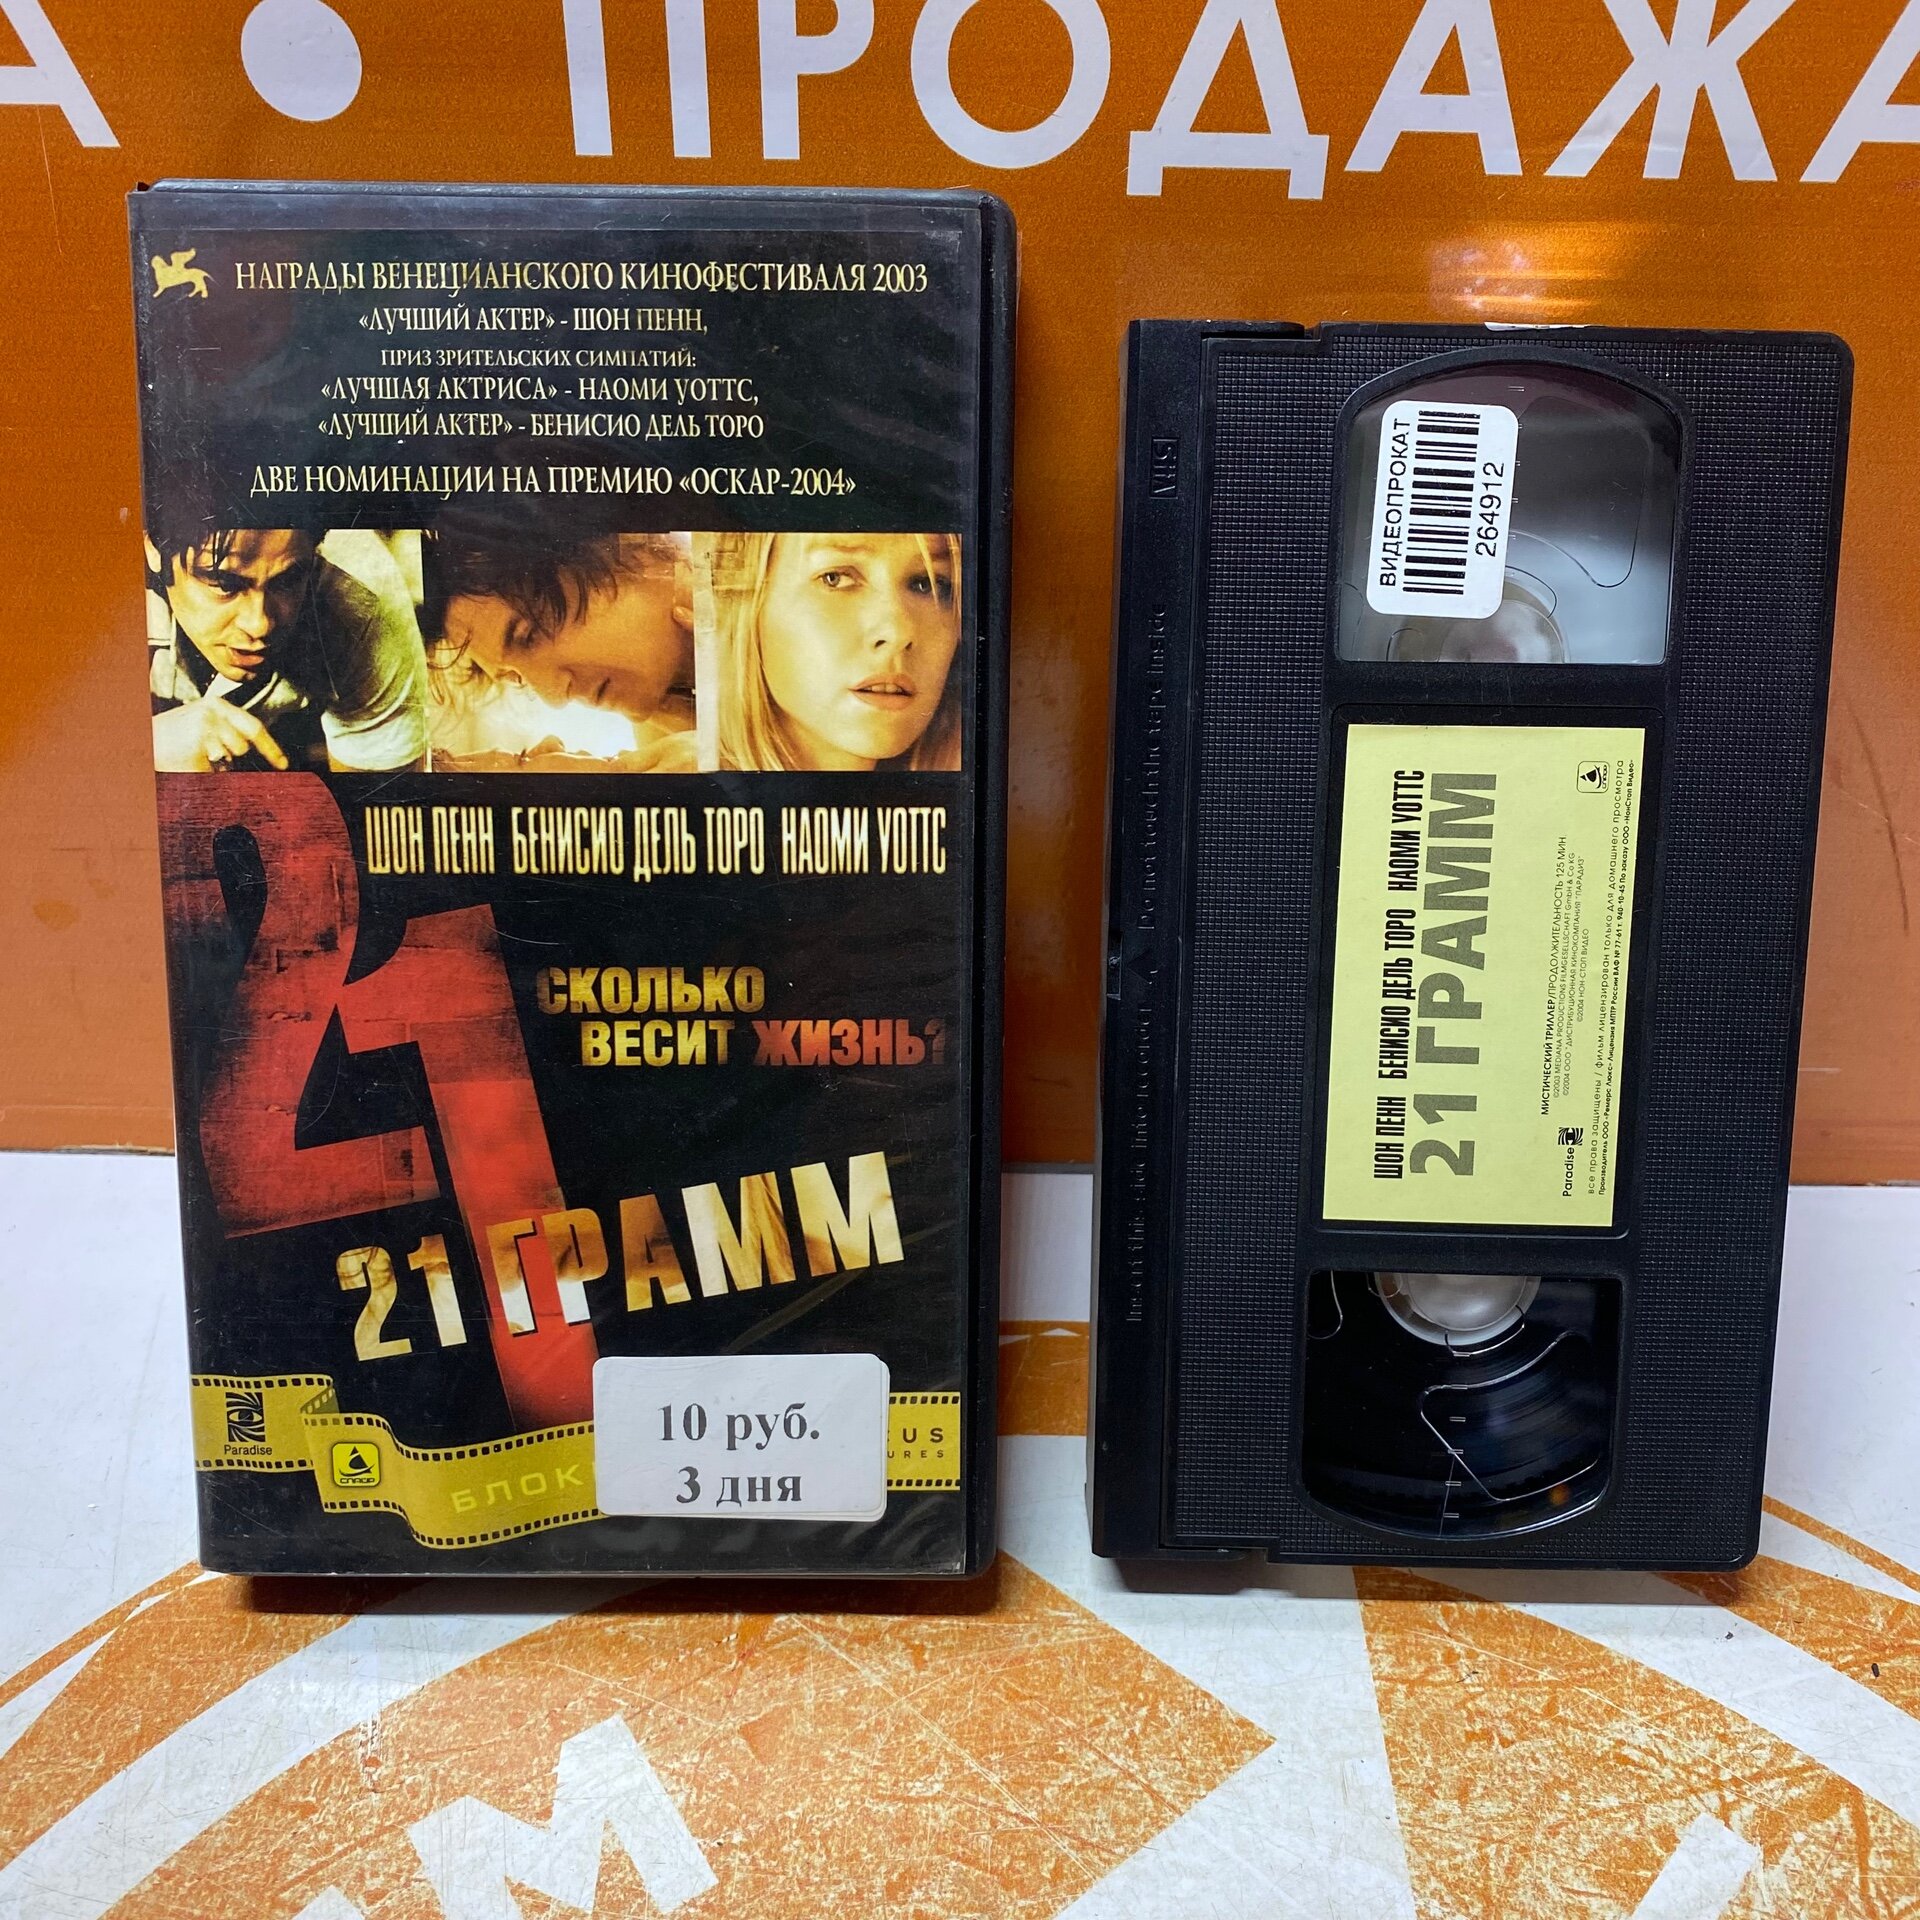 VHS-кассета "21 грамм"